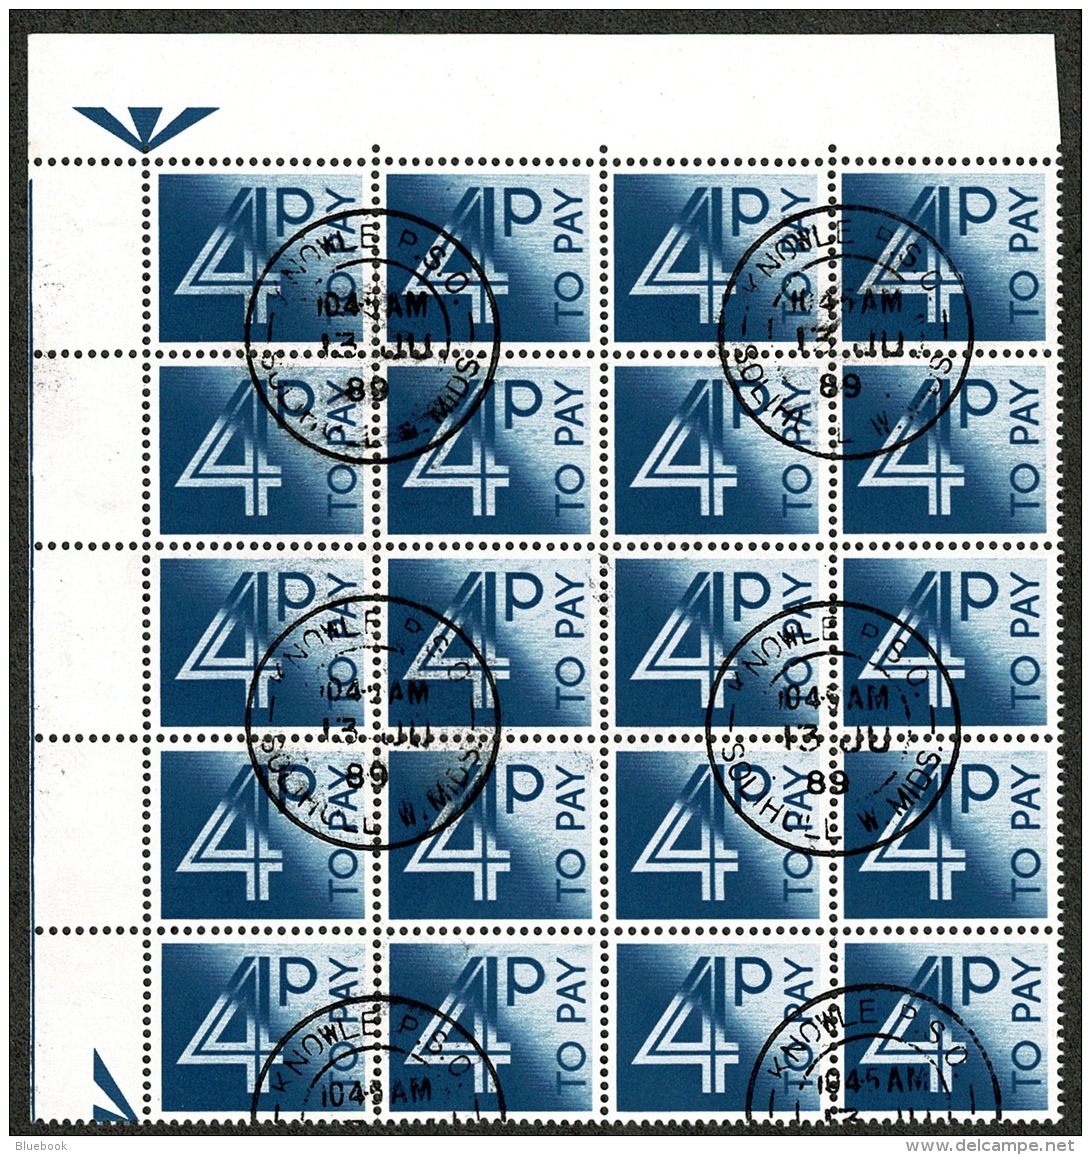 RB 1213 - Super Corner Block Of 20 X 4p GB Postage Stamps - Fine Used - Postage Due